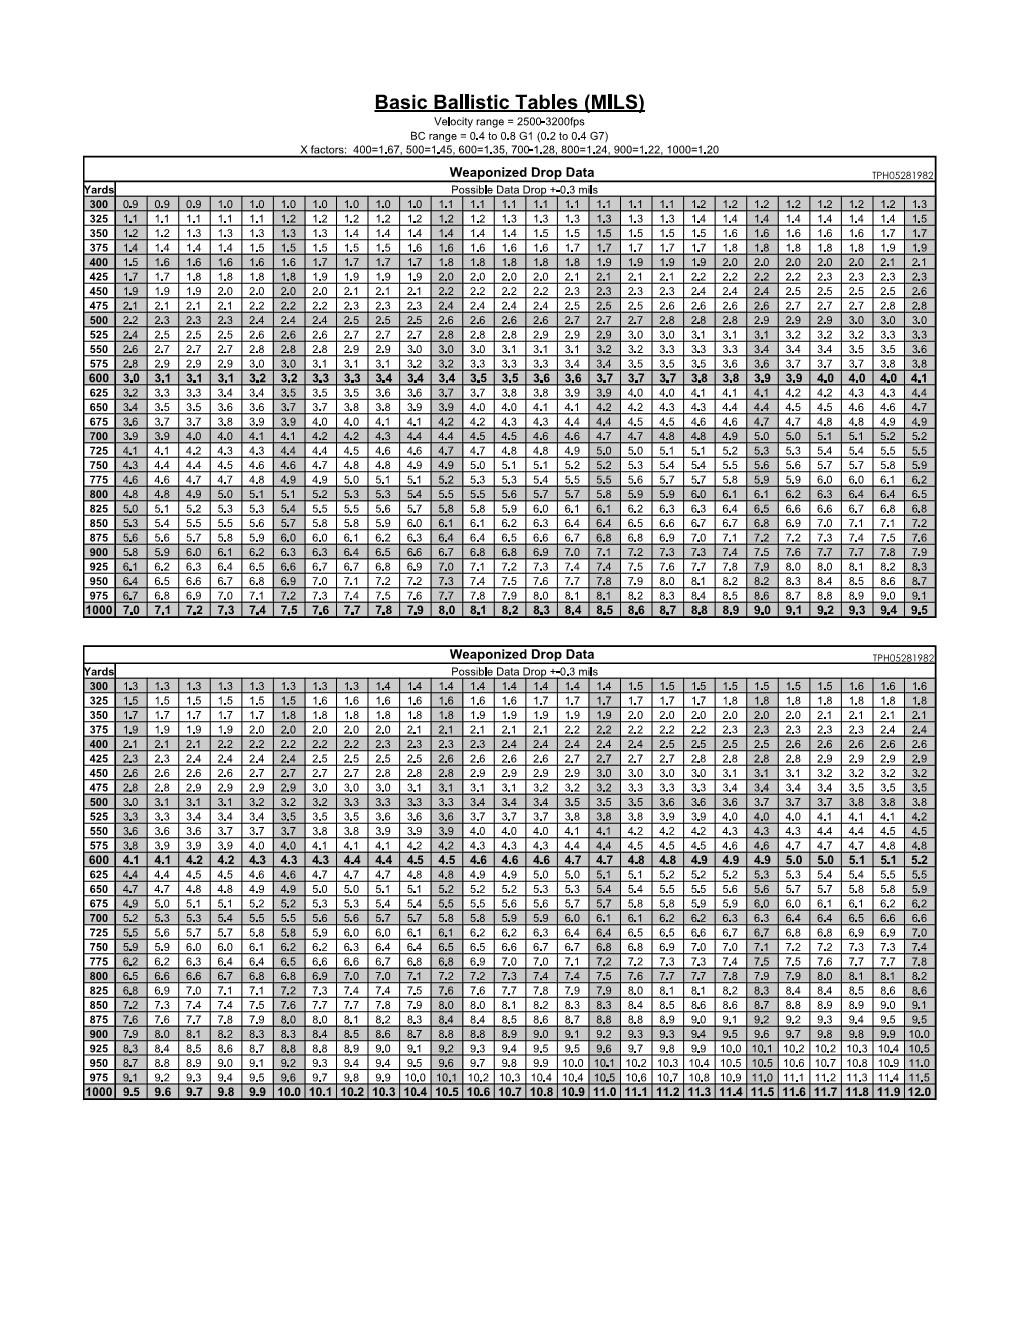 Basic Ballistic Tables 1 Page 002.jpg